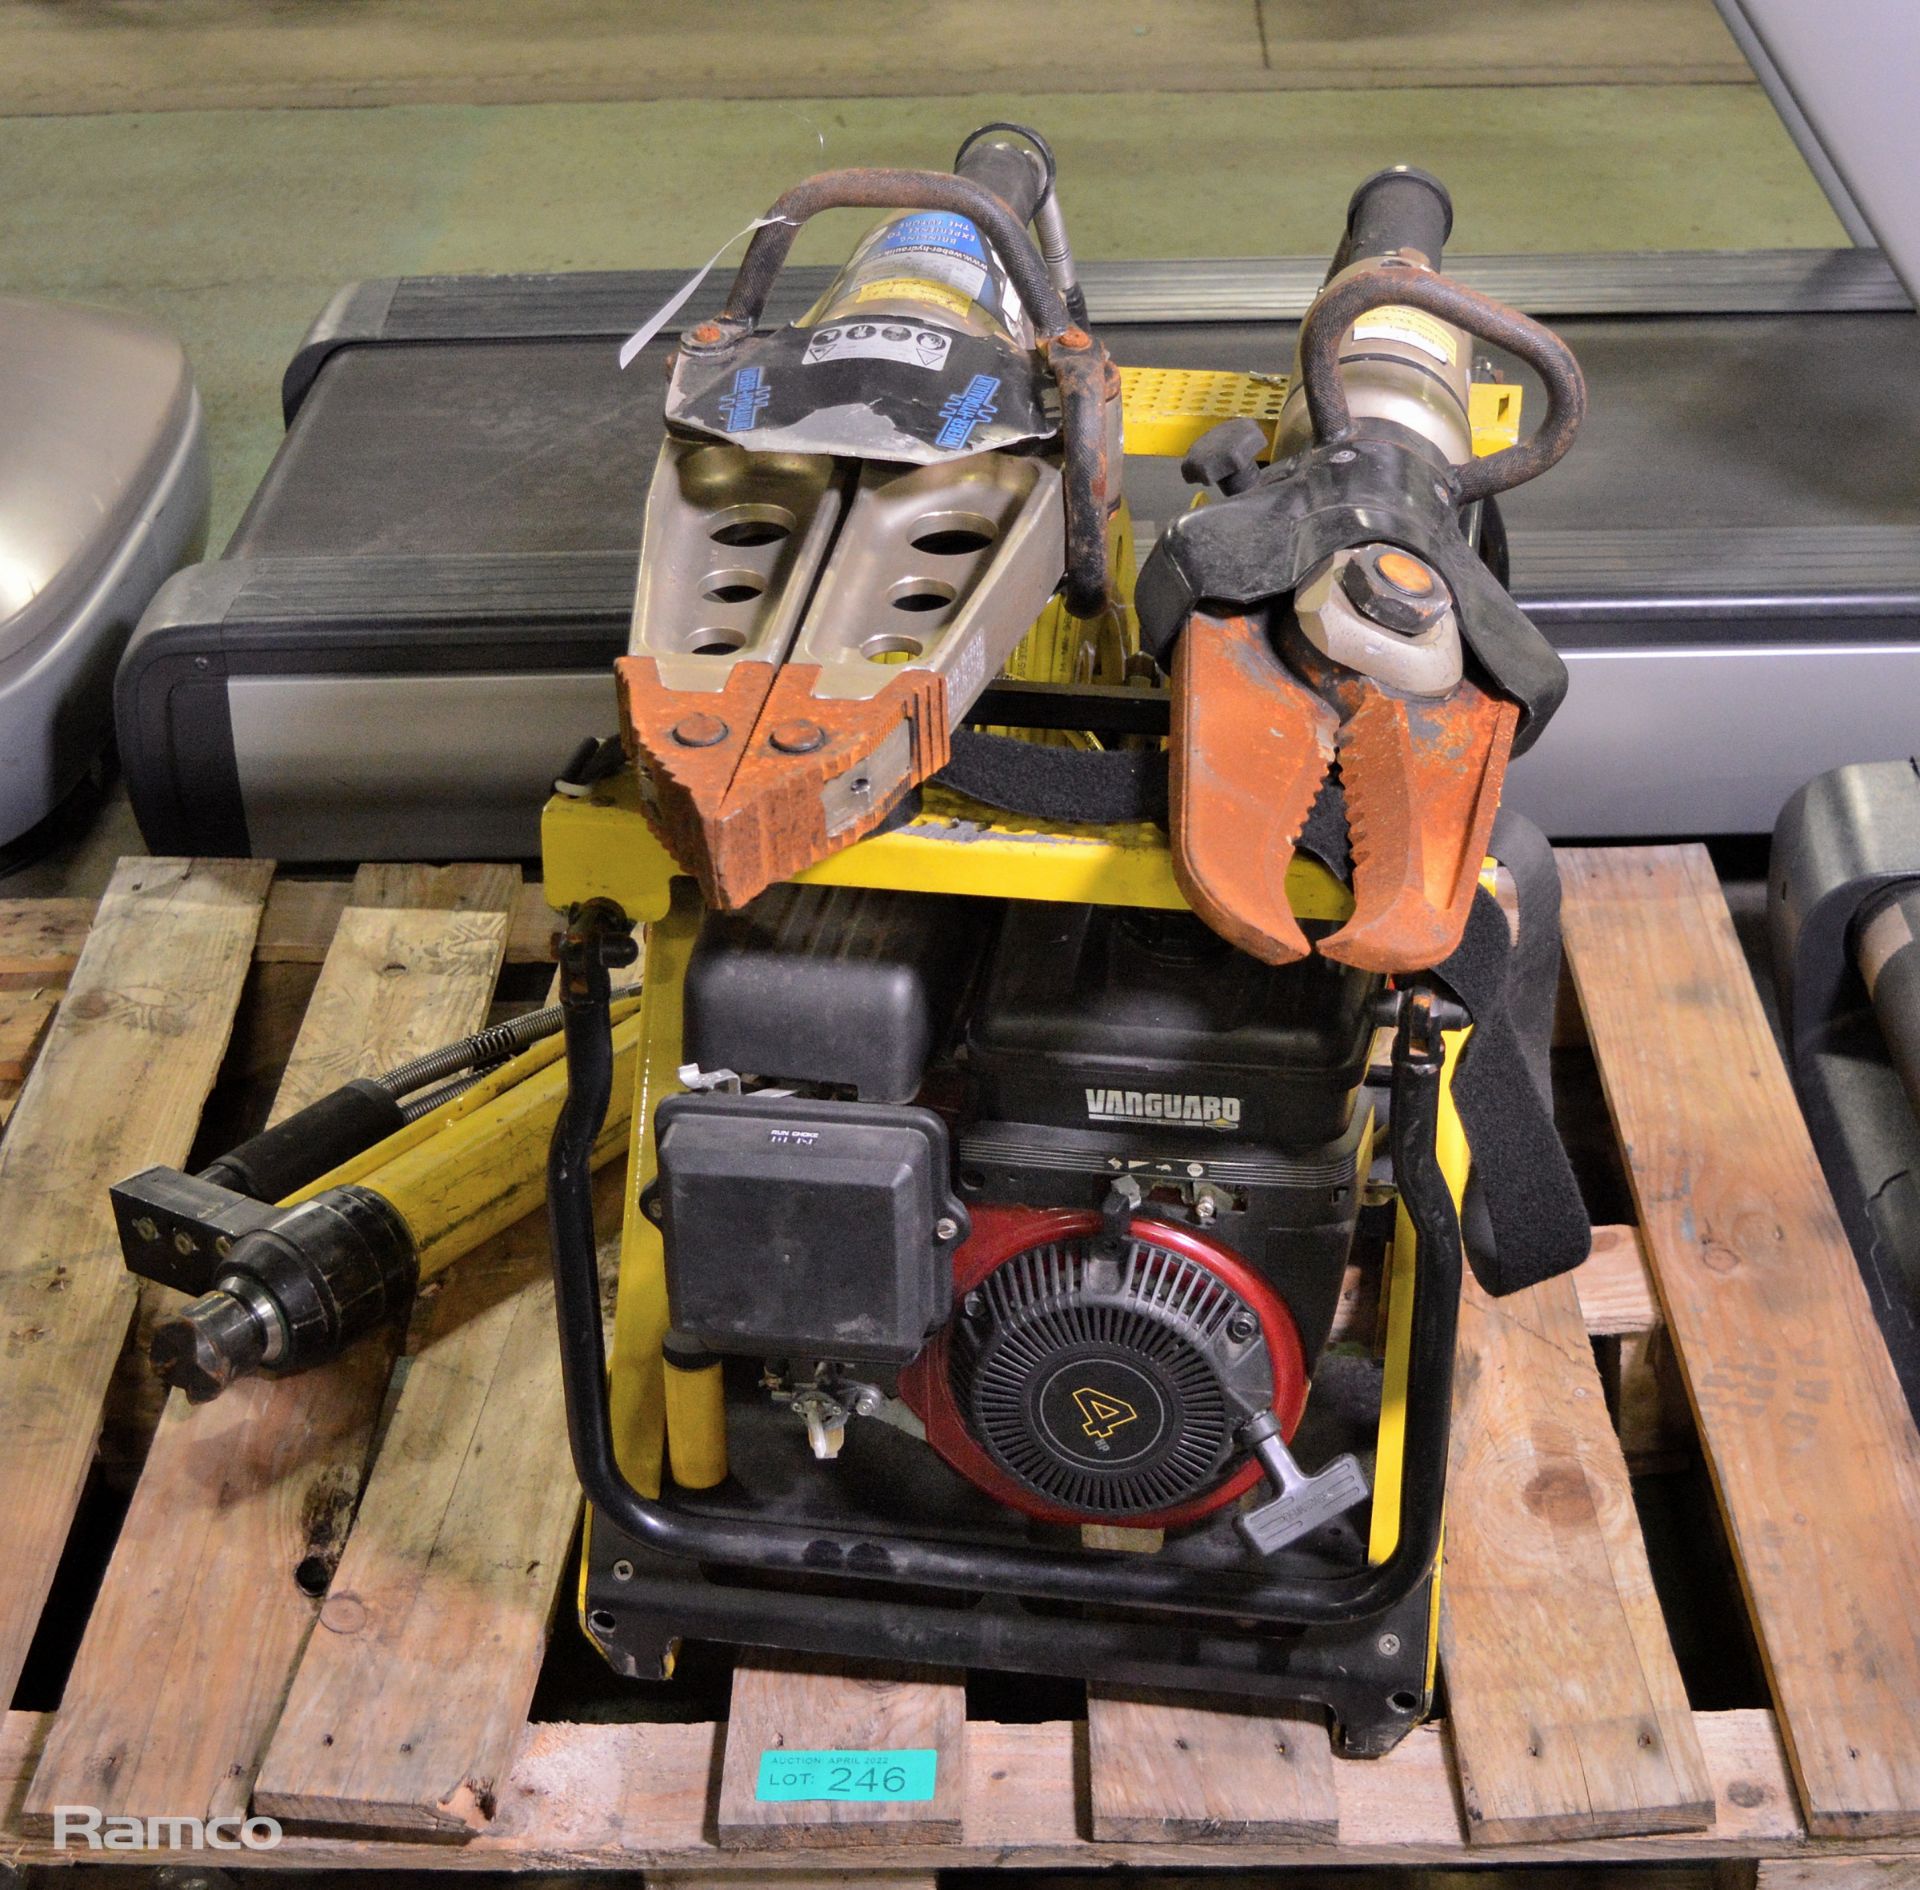 Weber Hydraulic Rescue Equipment & Accessories - Cutter, Spreader, Ram, Power pack & hoses